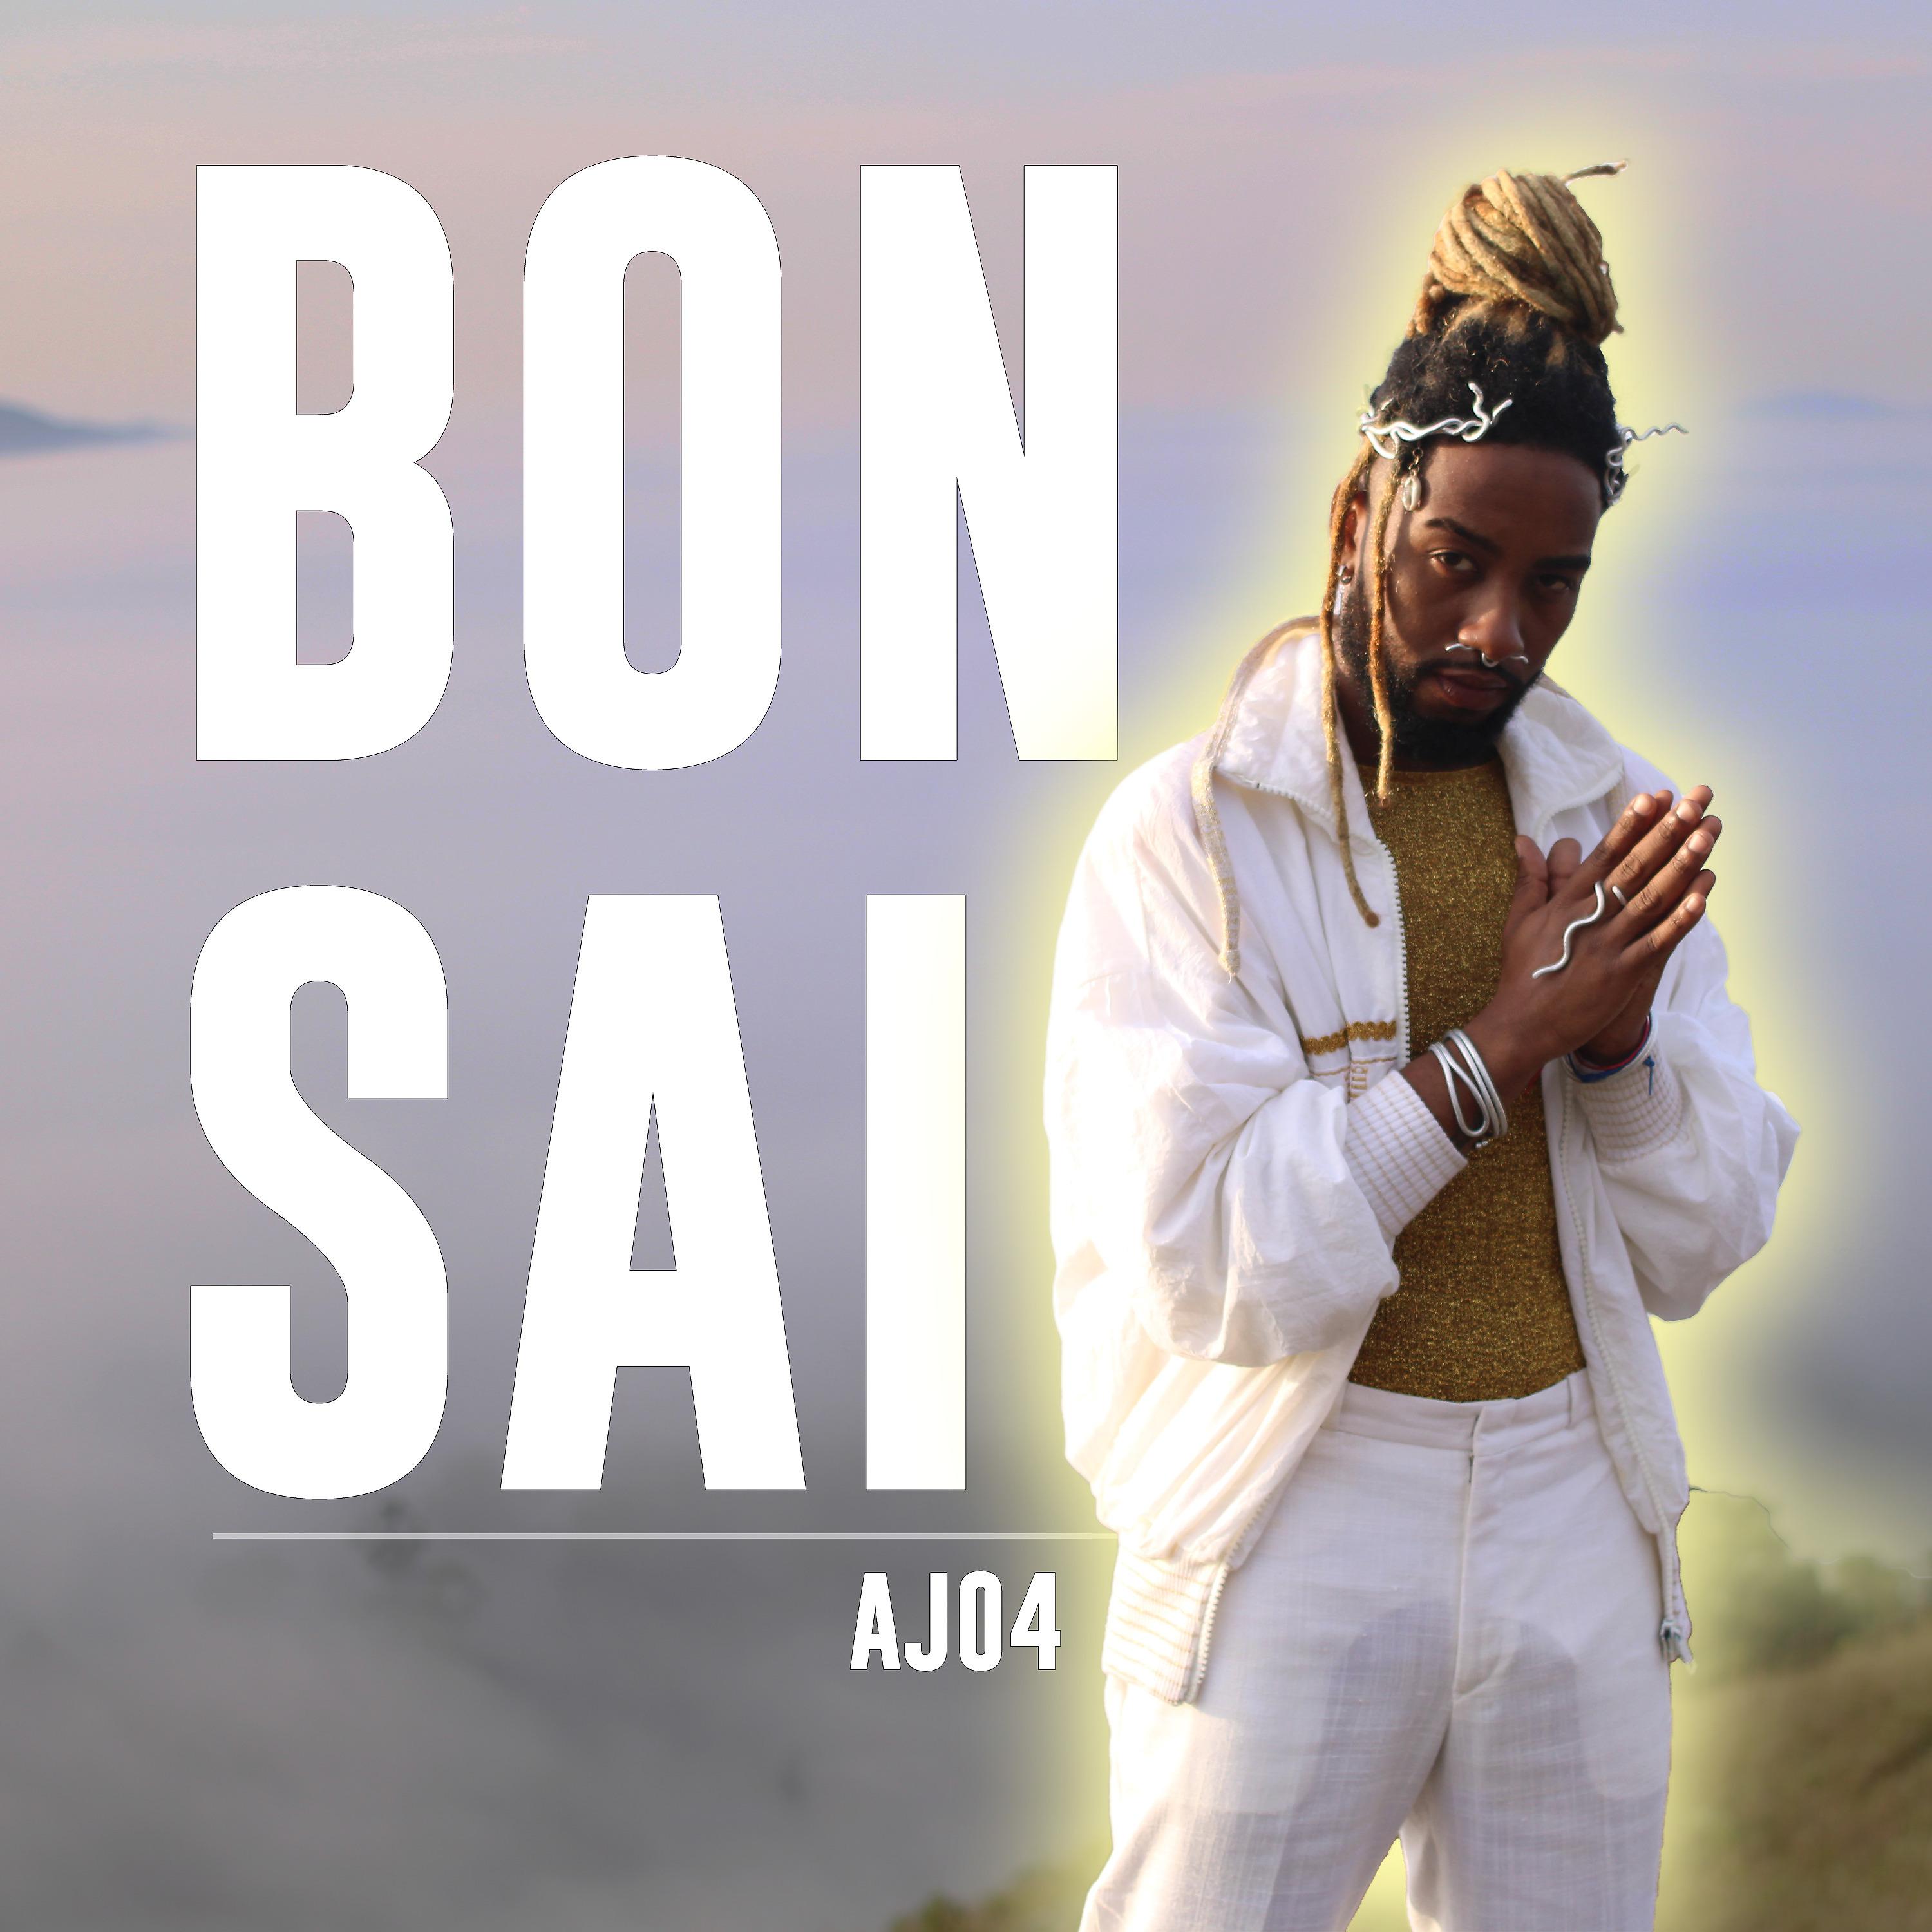 Постер альбома Bonsai